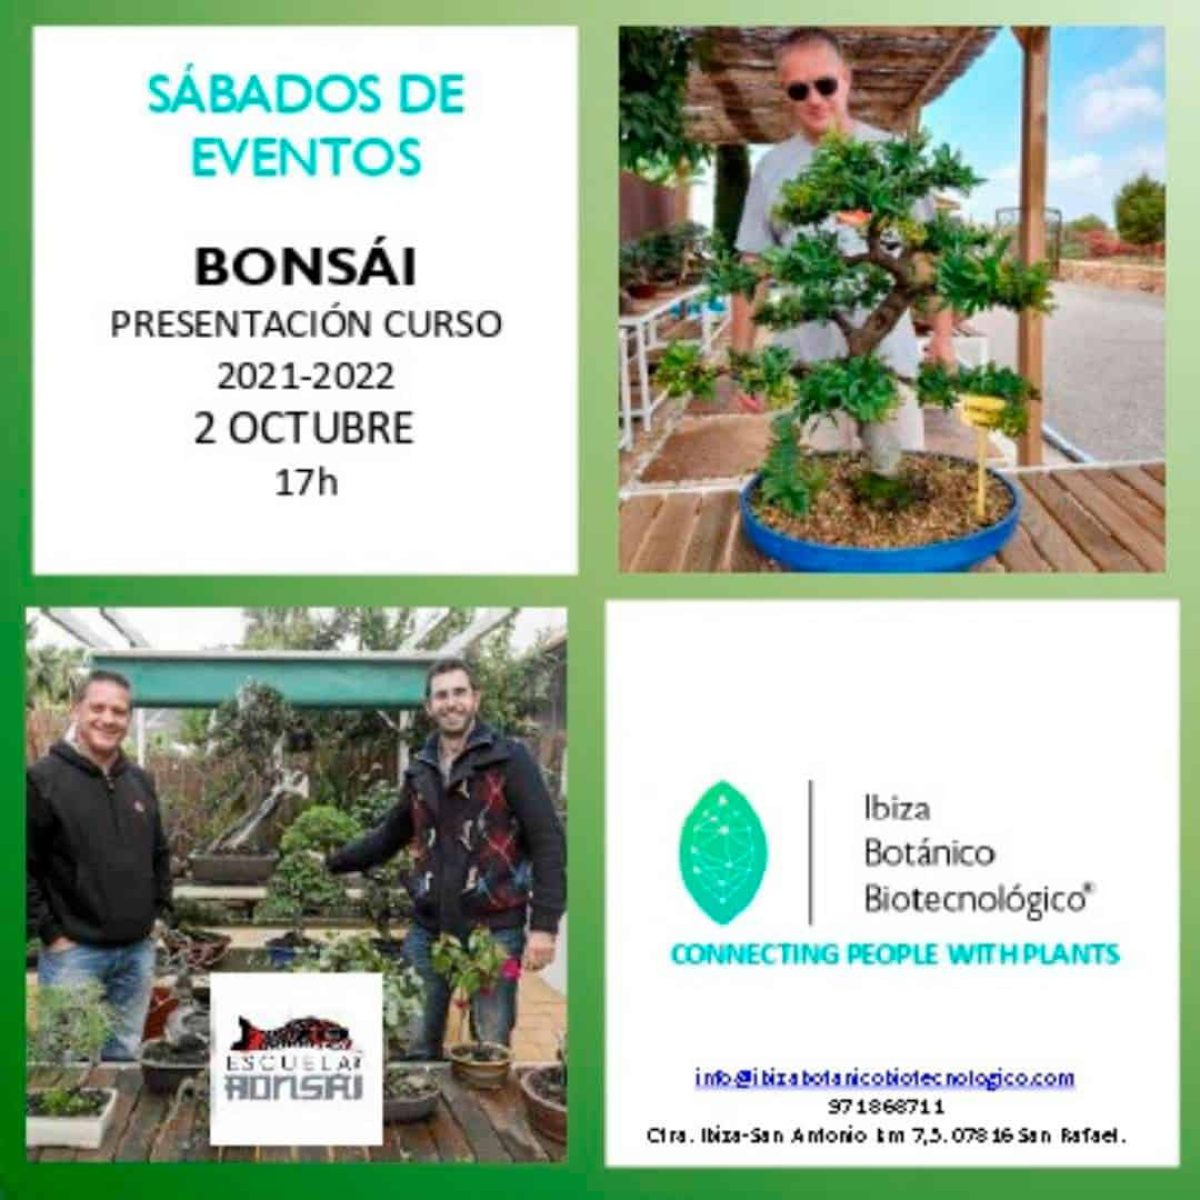 présentation-cours-bonsai-ibiza-biotechnologie-botanique-2021-welcometoibiza